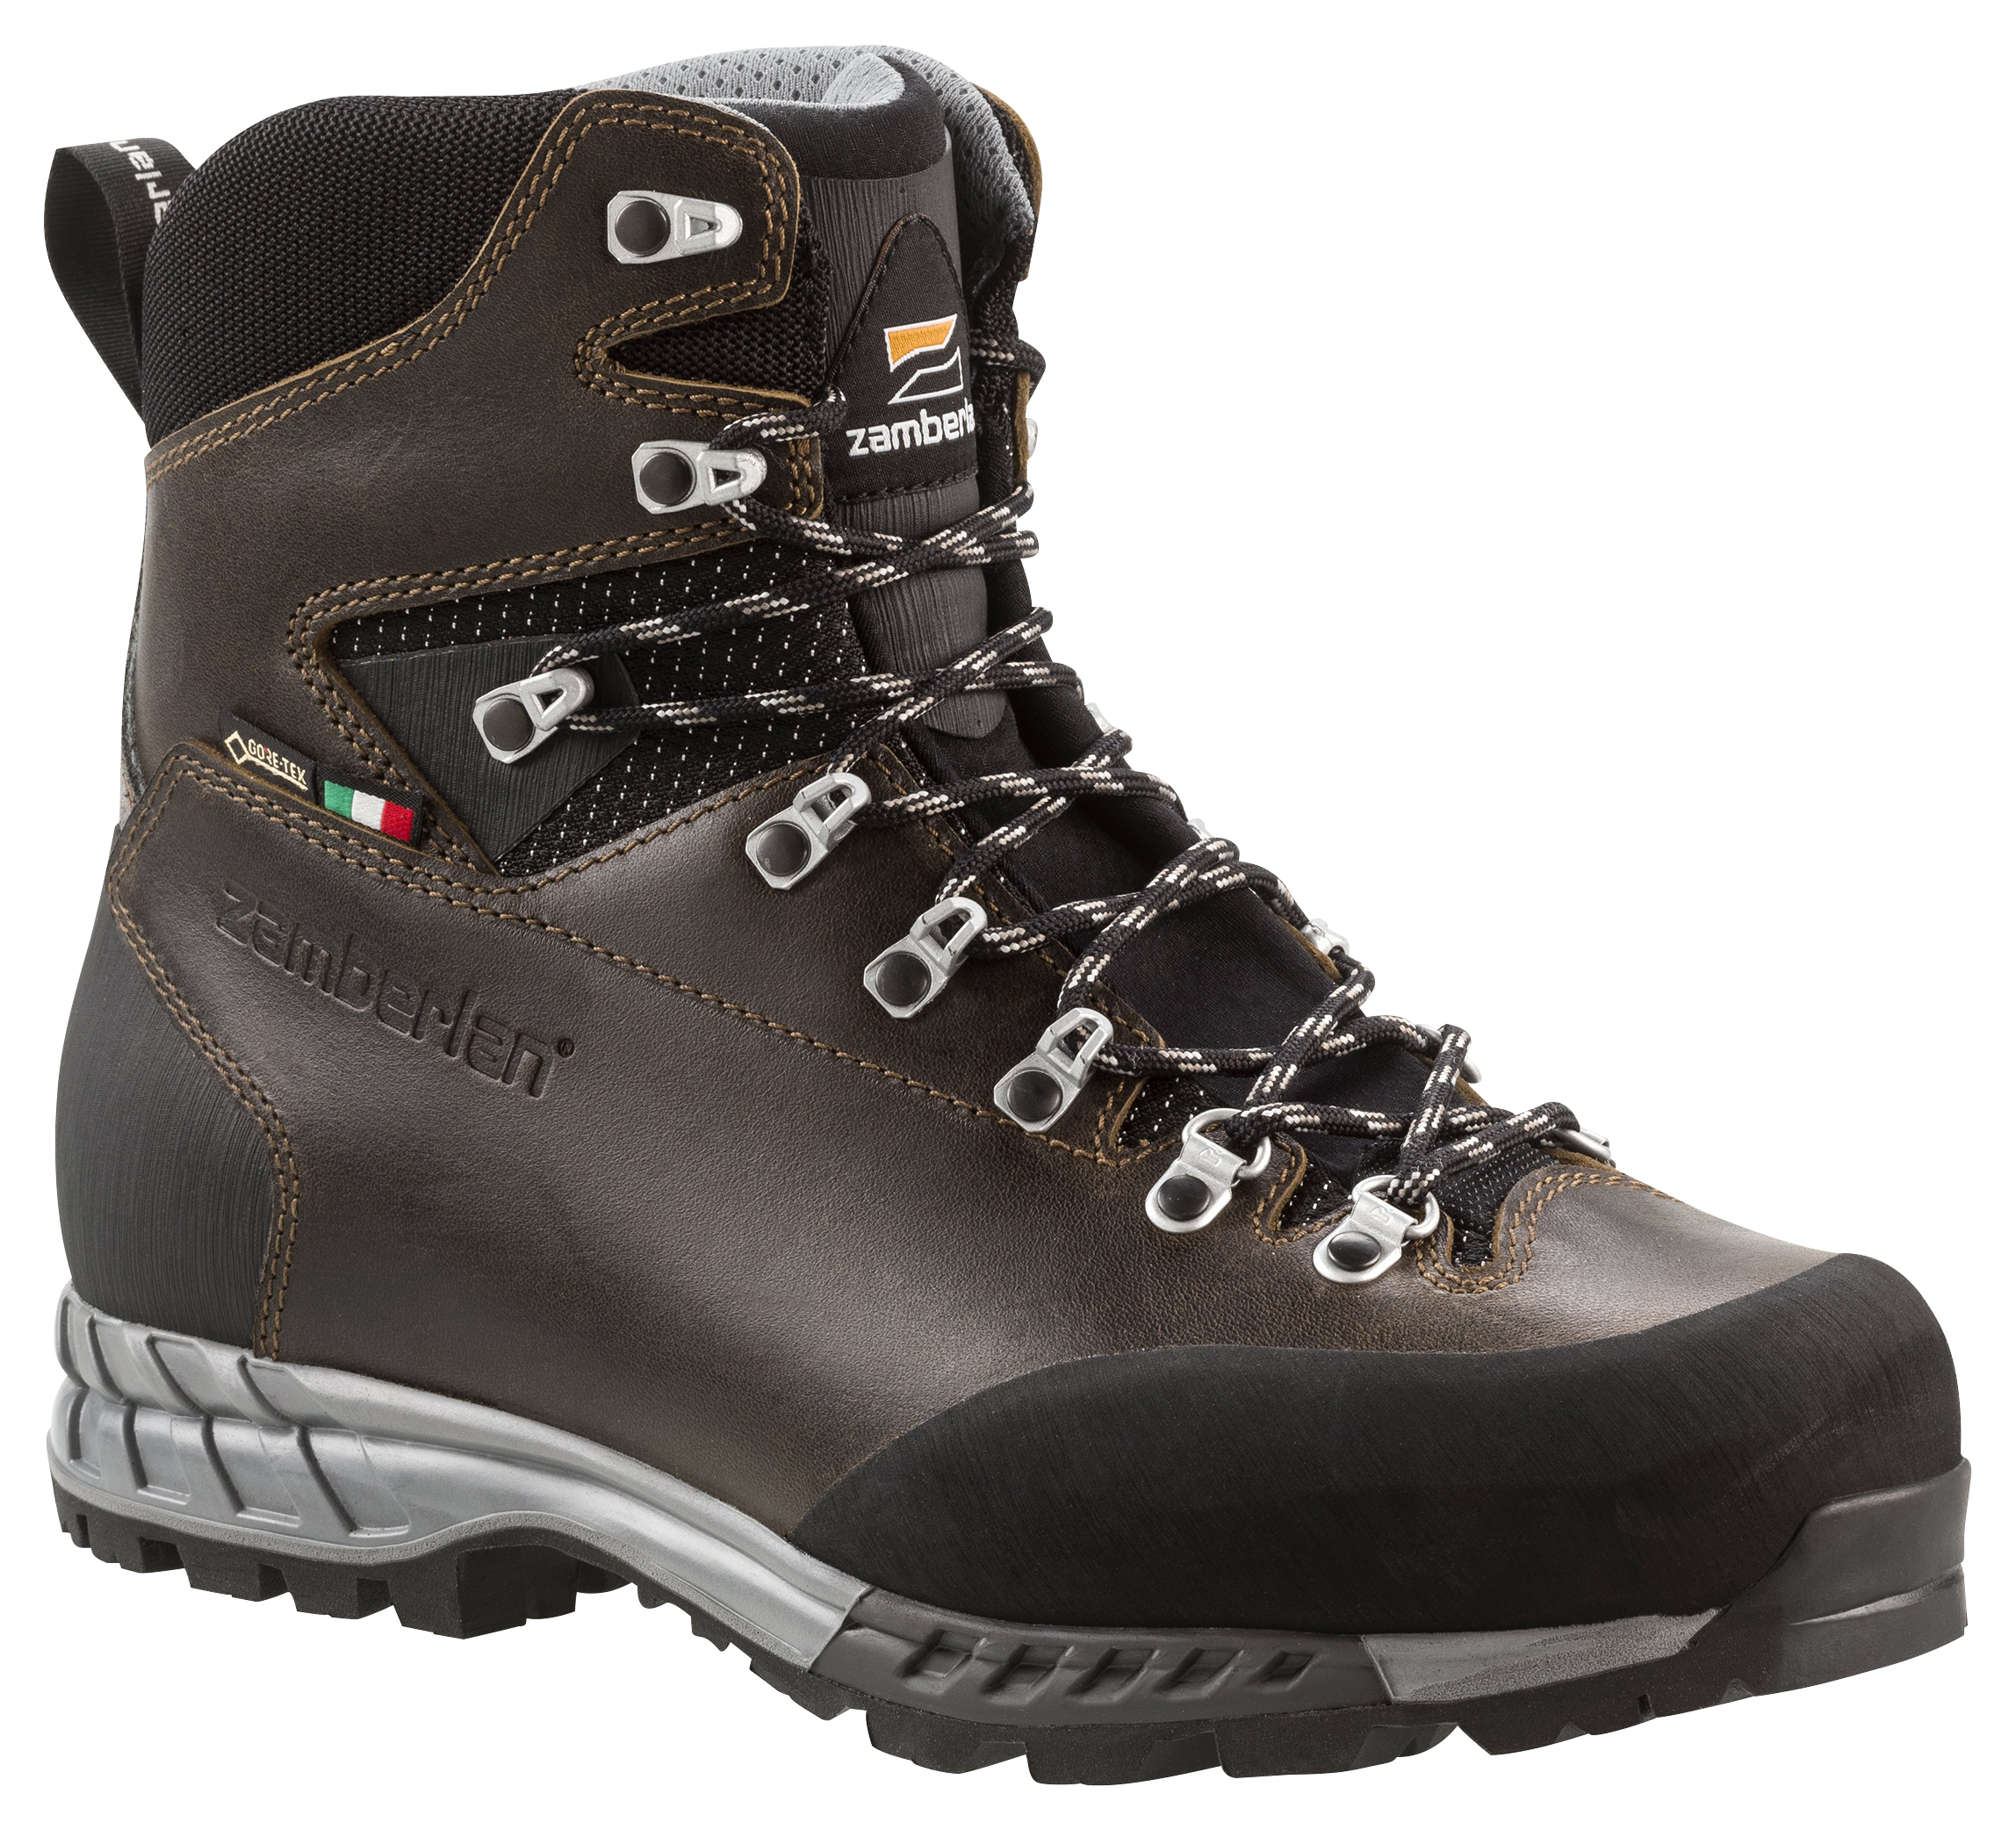 Zamberlan 1111 Cresta GTX RR Waterproof Hiking Boots for Men - Waxed Dark Brown - 8M